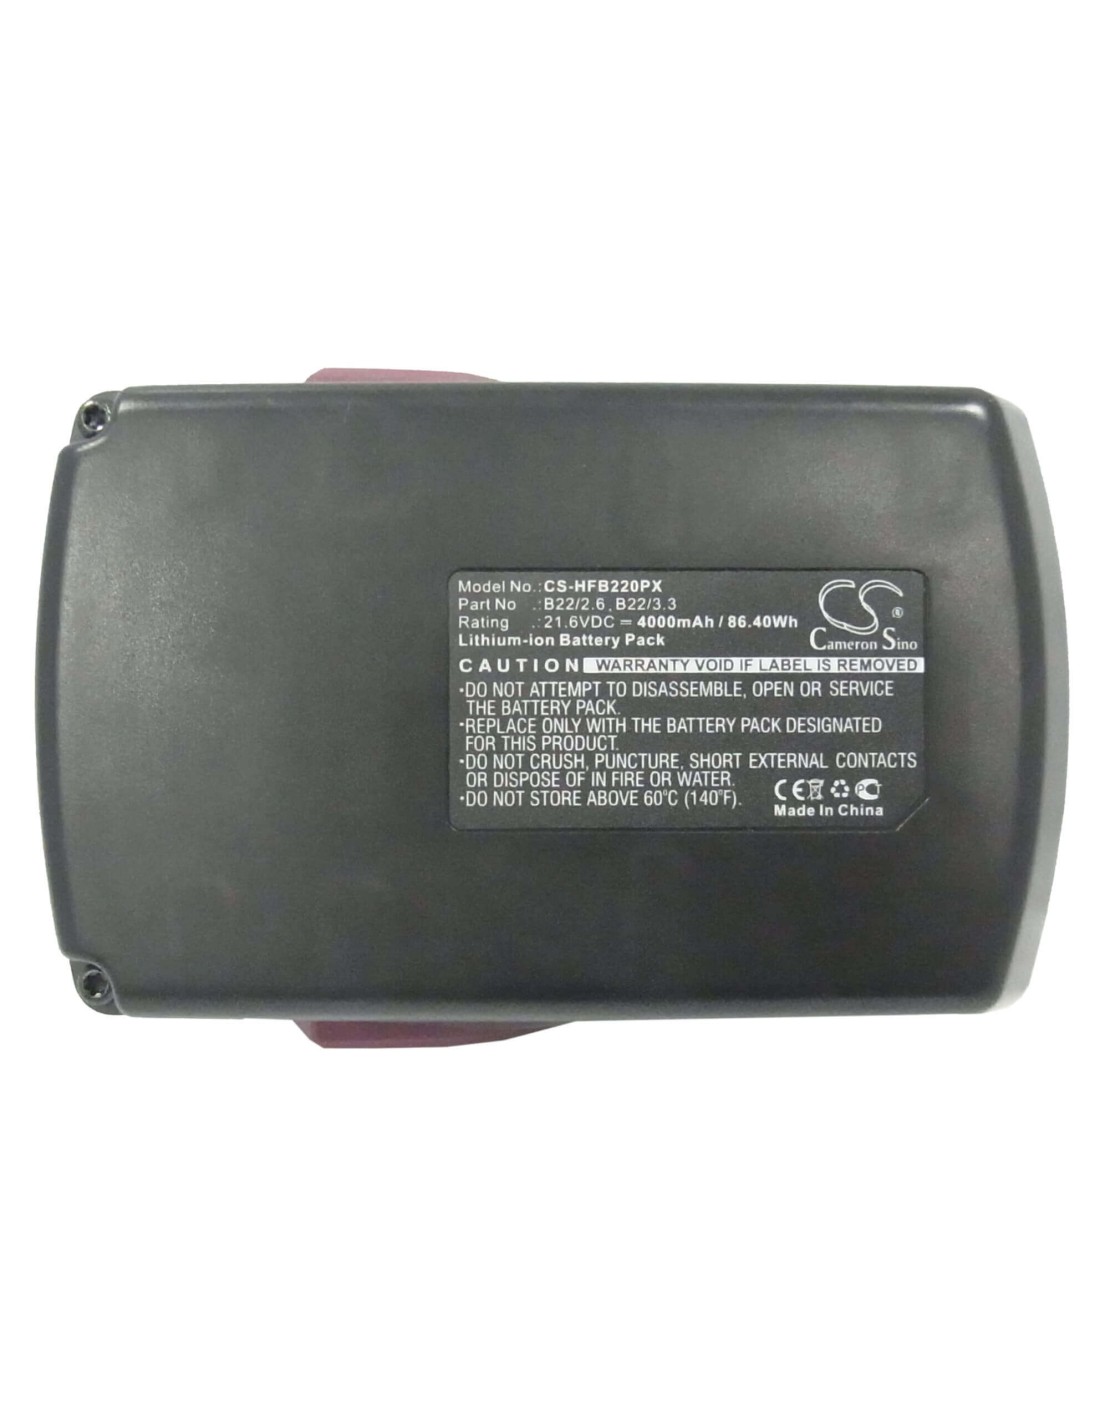 Battery for Hilti Ag 125-a22, Hde 500-a22, Scm 22-a 21.6V, 4000mAh - 86.40Wh